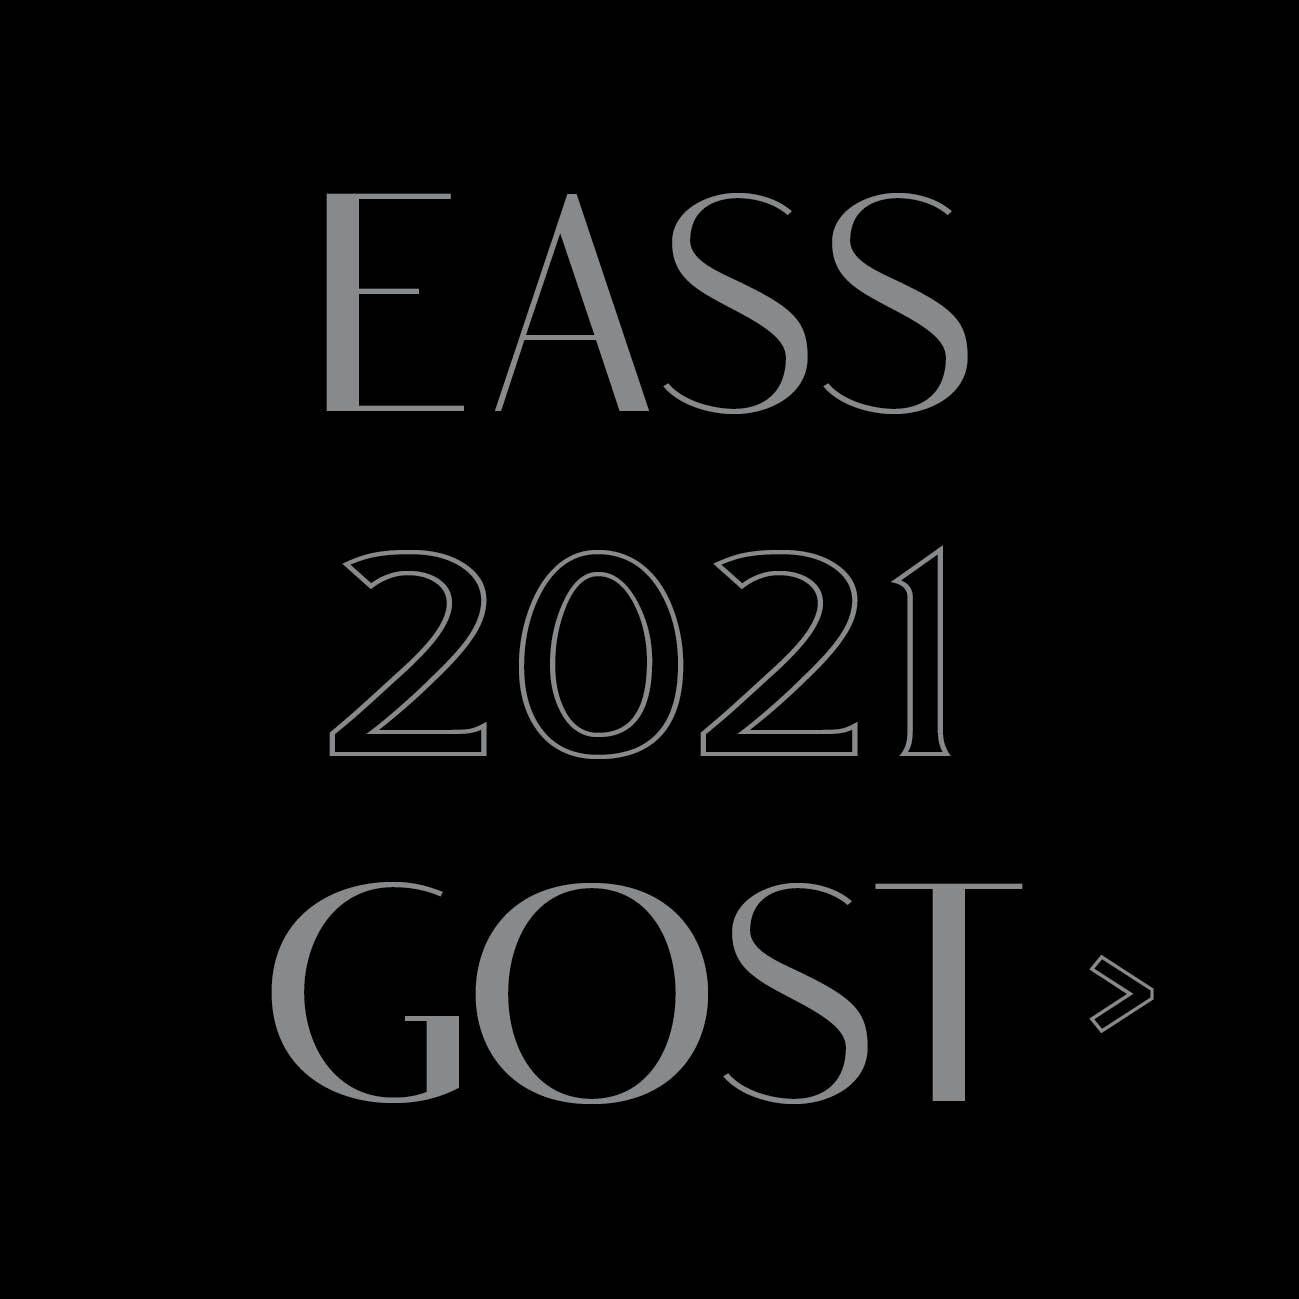 GOST_EASS2021 invite_public opening_Final.jpg